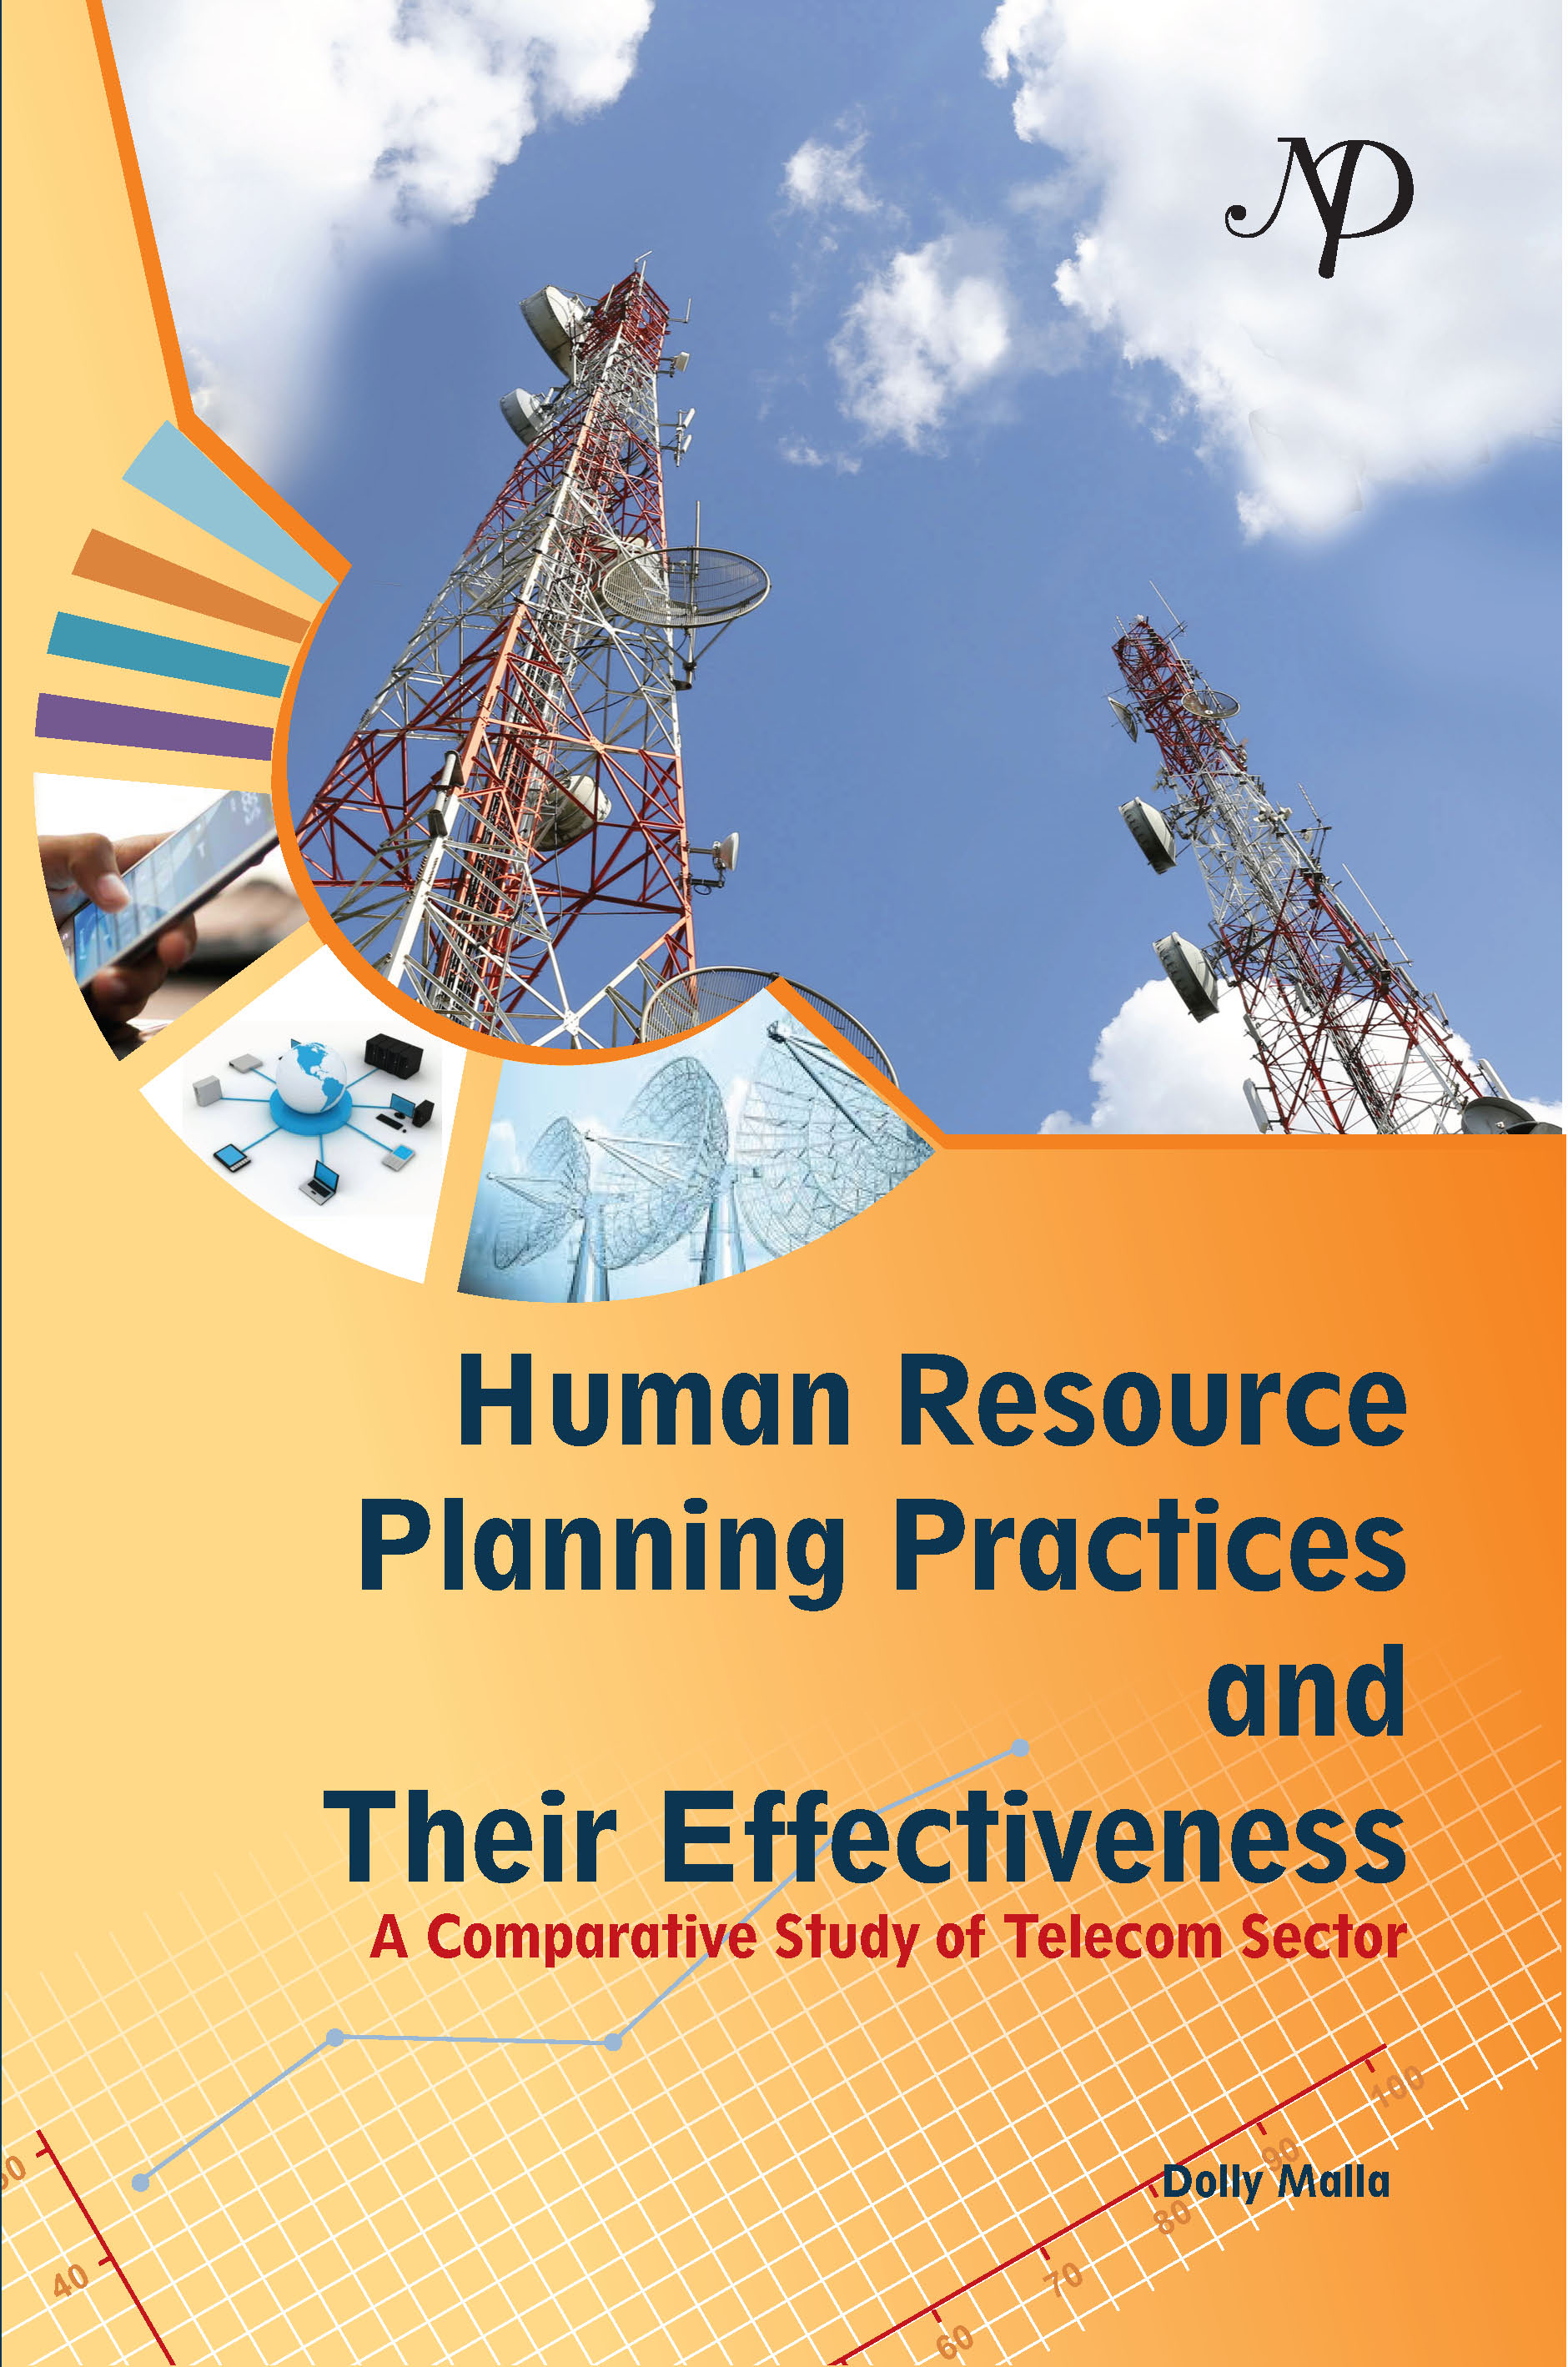 Human Resource Planning Cover.jpg